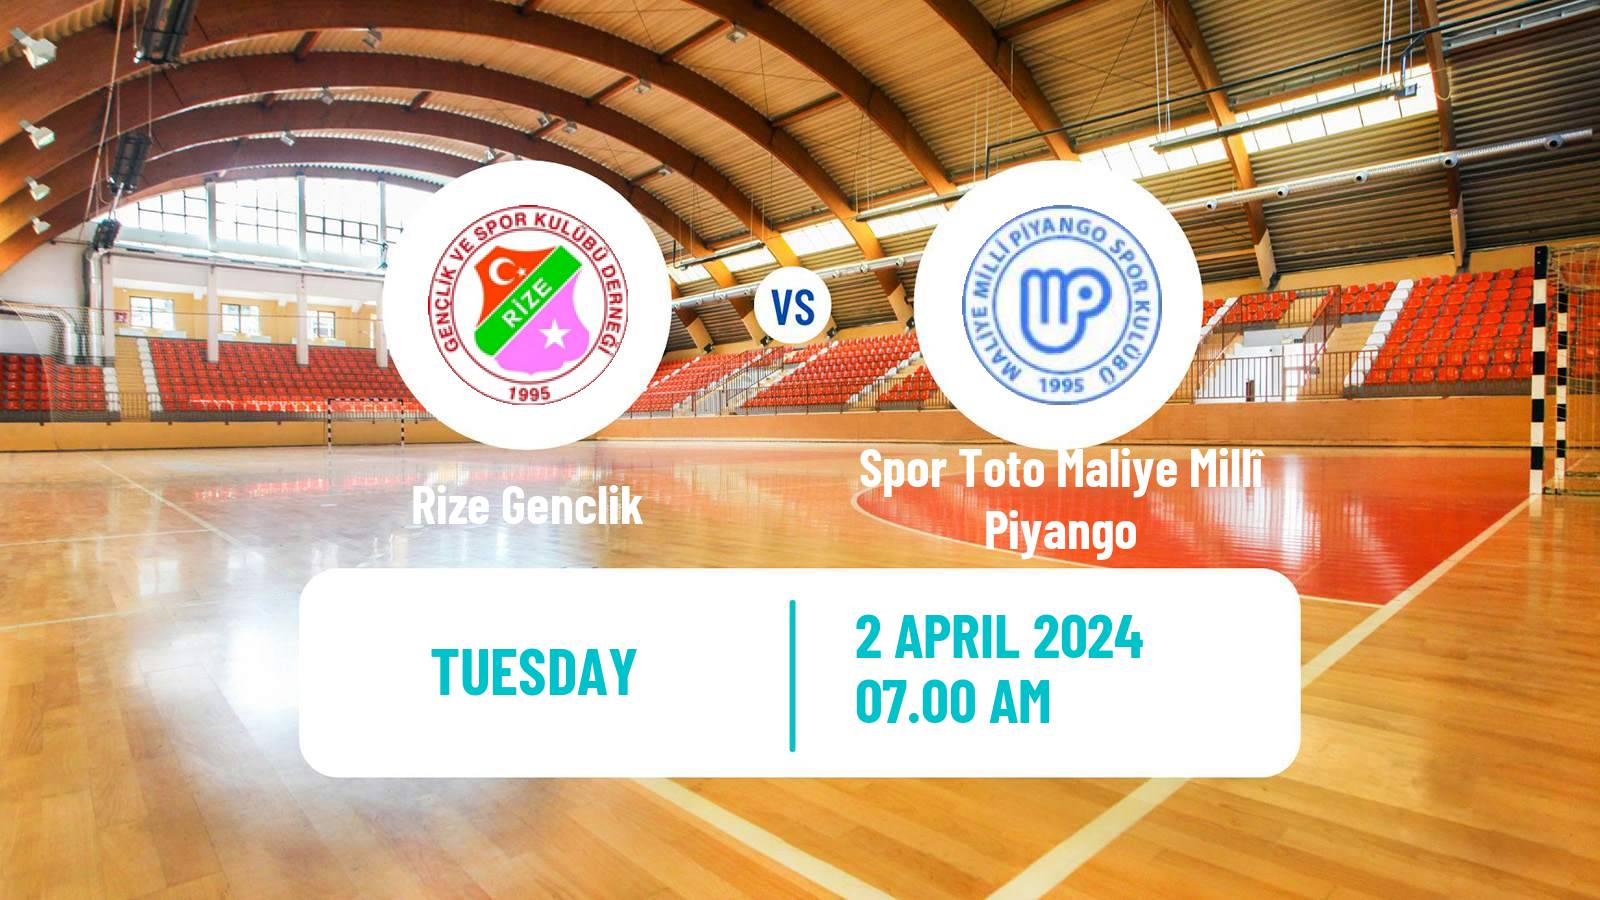 Handball Turkish Superlig Handball Rize Genclik - Spor Toto Maliye Millî Piyango